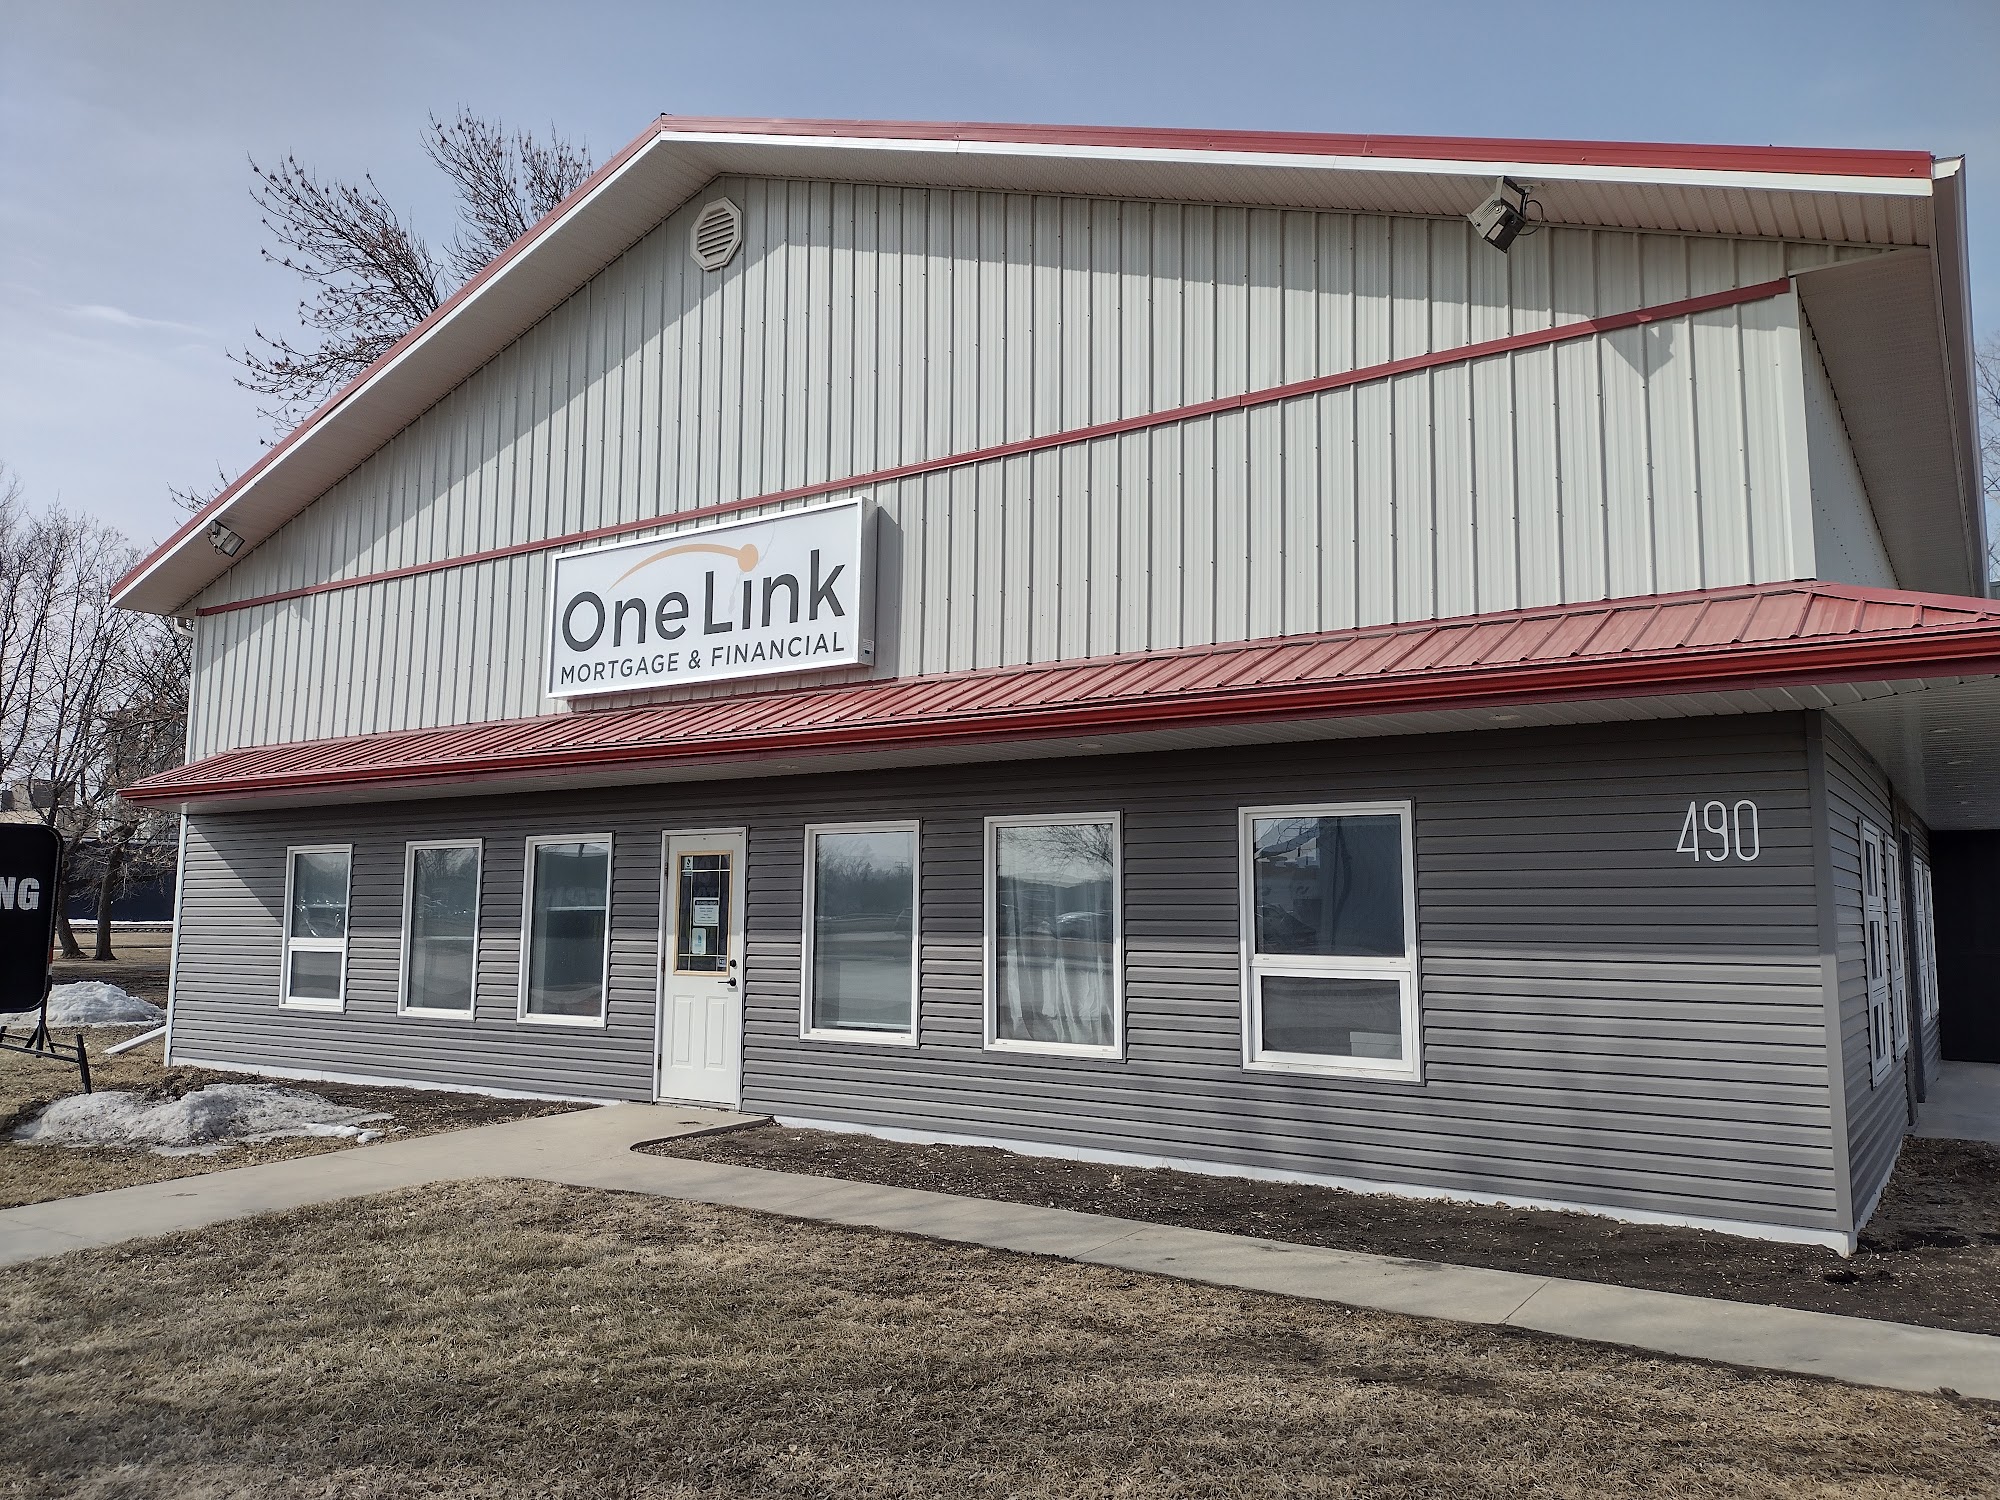 One Link Mortgage & Financial Winkler 490 Main St, Winkler Manitoba R6W 1A1